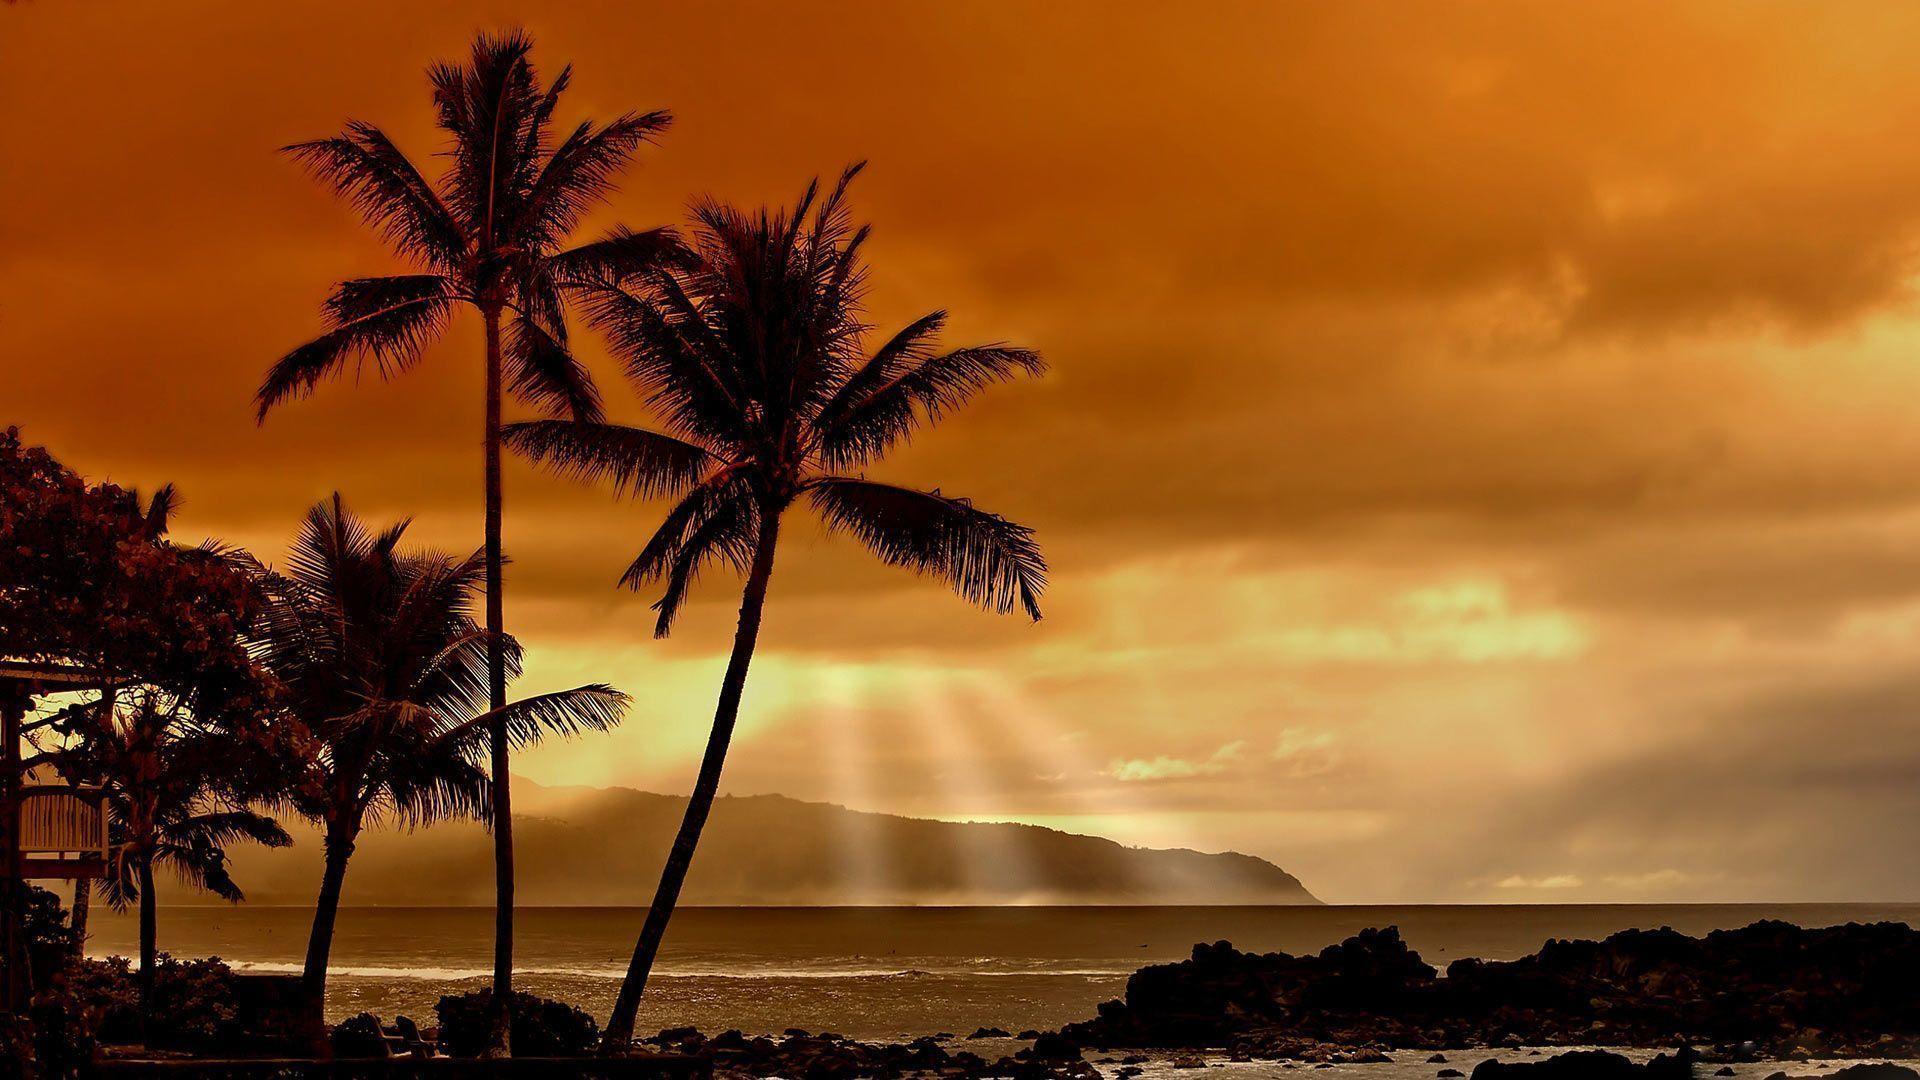 Sunset Hawaiian Desktop Backgrounds Animal desktop wallpapers